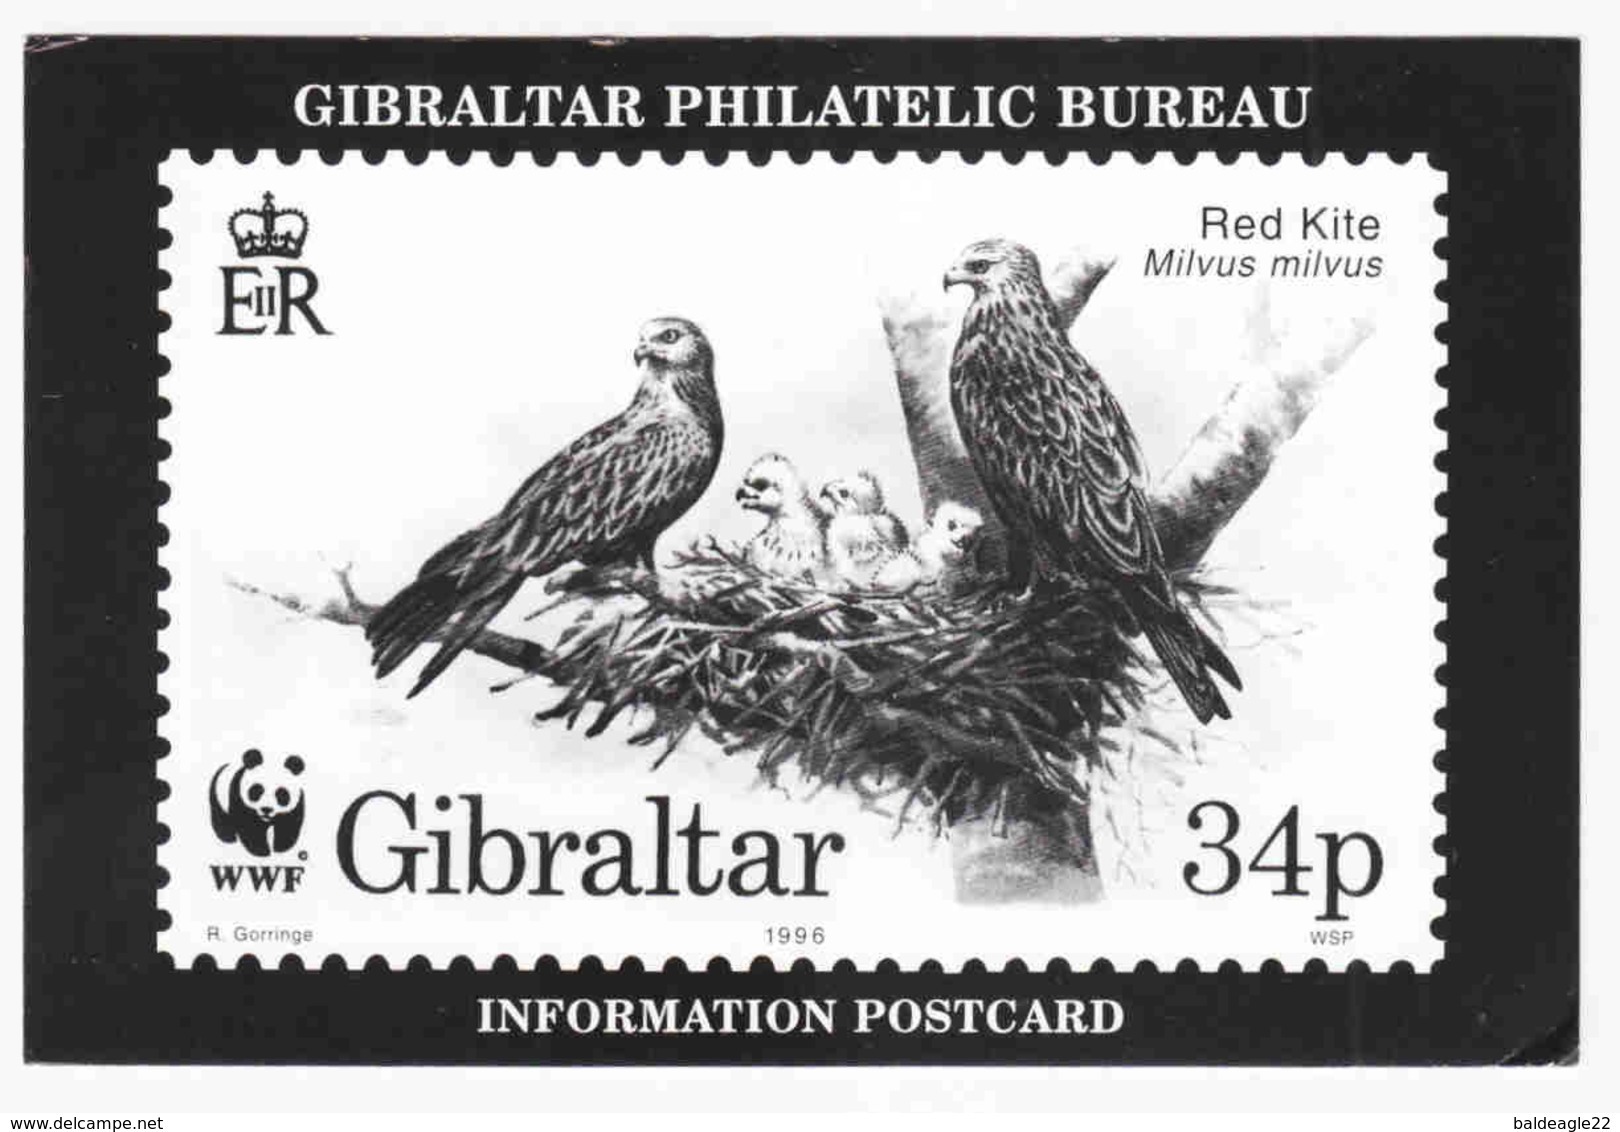 Gibraltar - Philatelic Bureau - Birds, Red Kite - WWF - 1996 - Used - Gibraltar